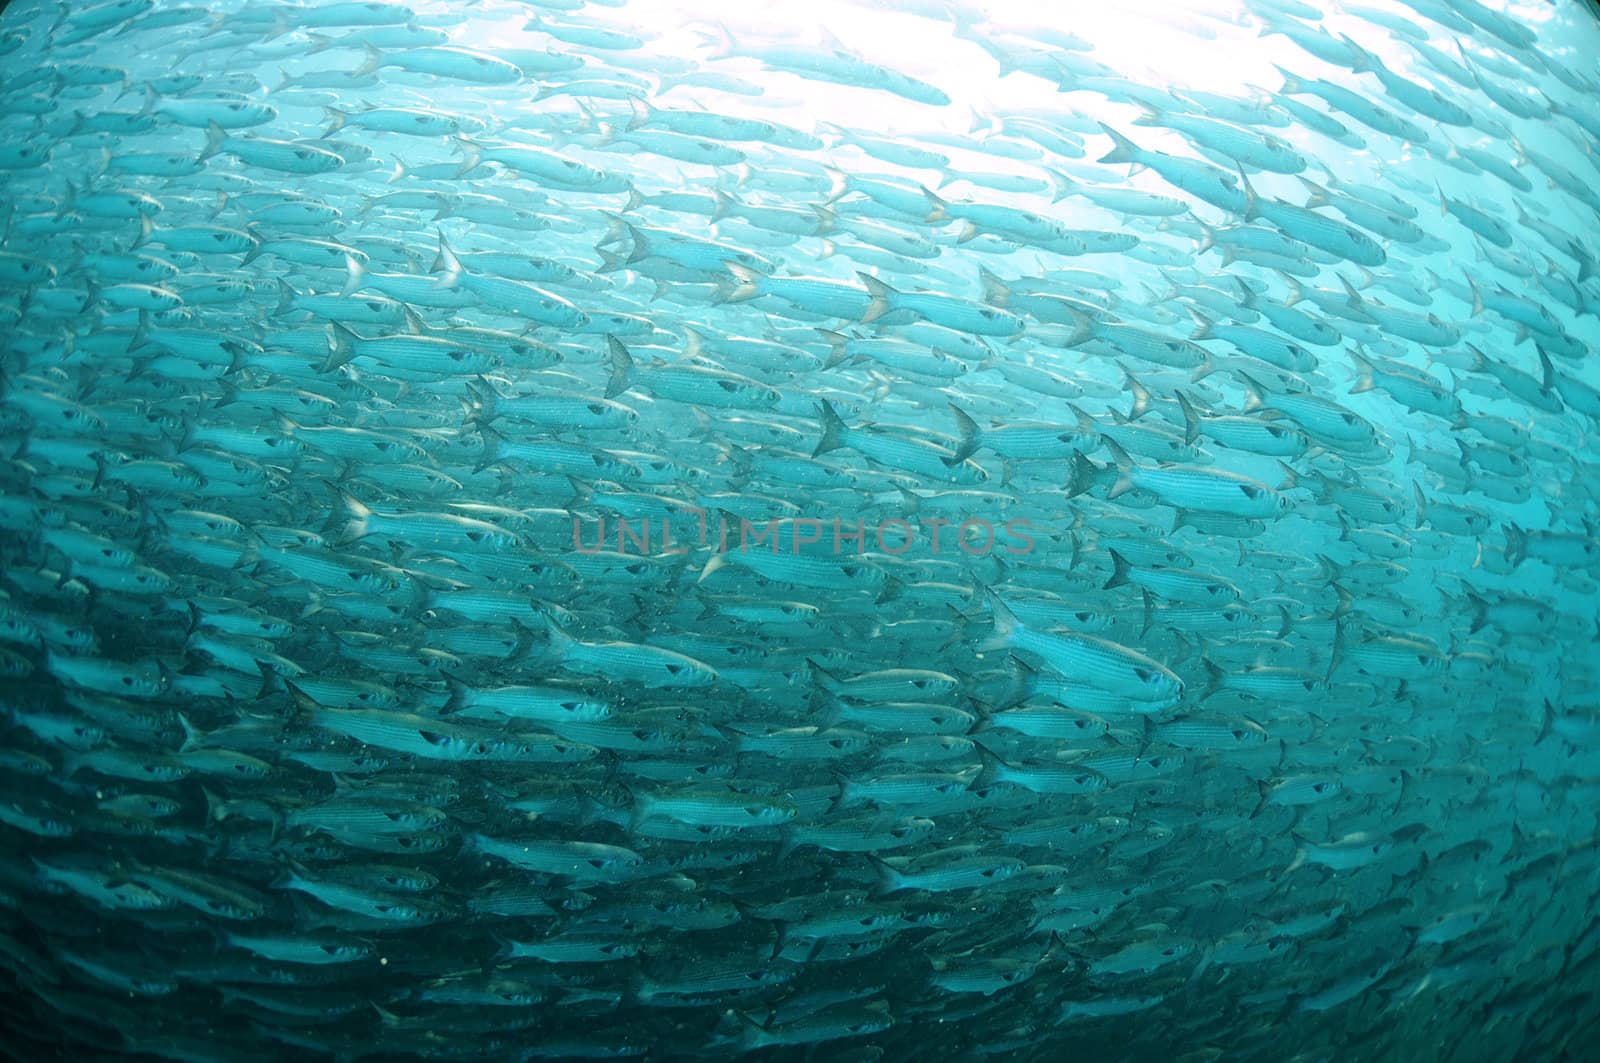 School of mullet fish swimming in ocean